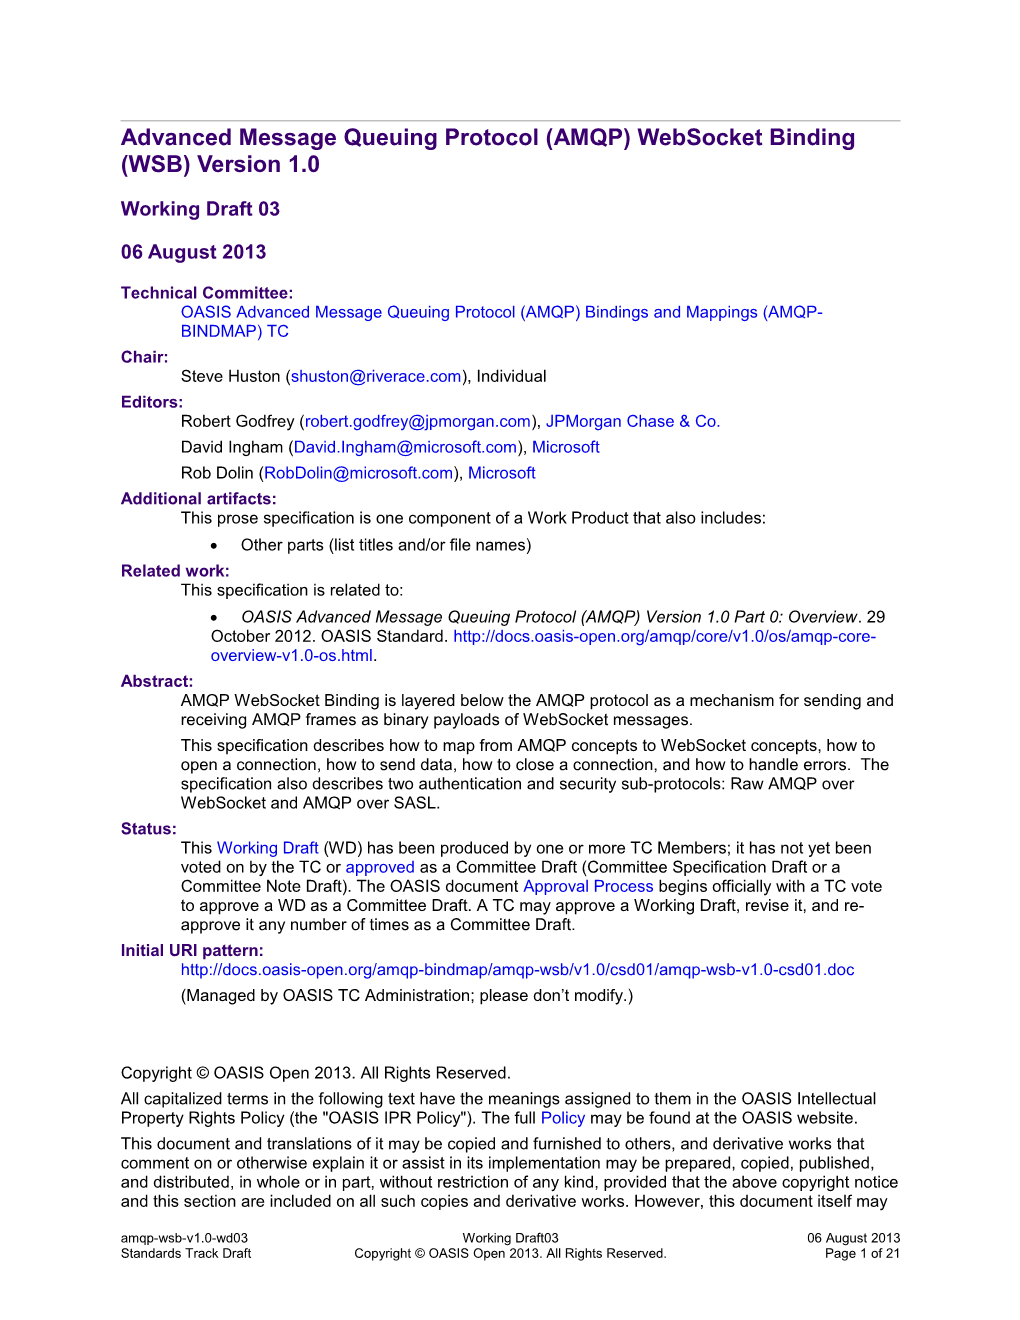 Advanced Message Queuing Protocol (AMQP) Websocket Binding (WSB) Version 1.0